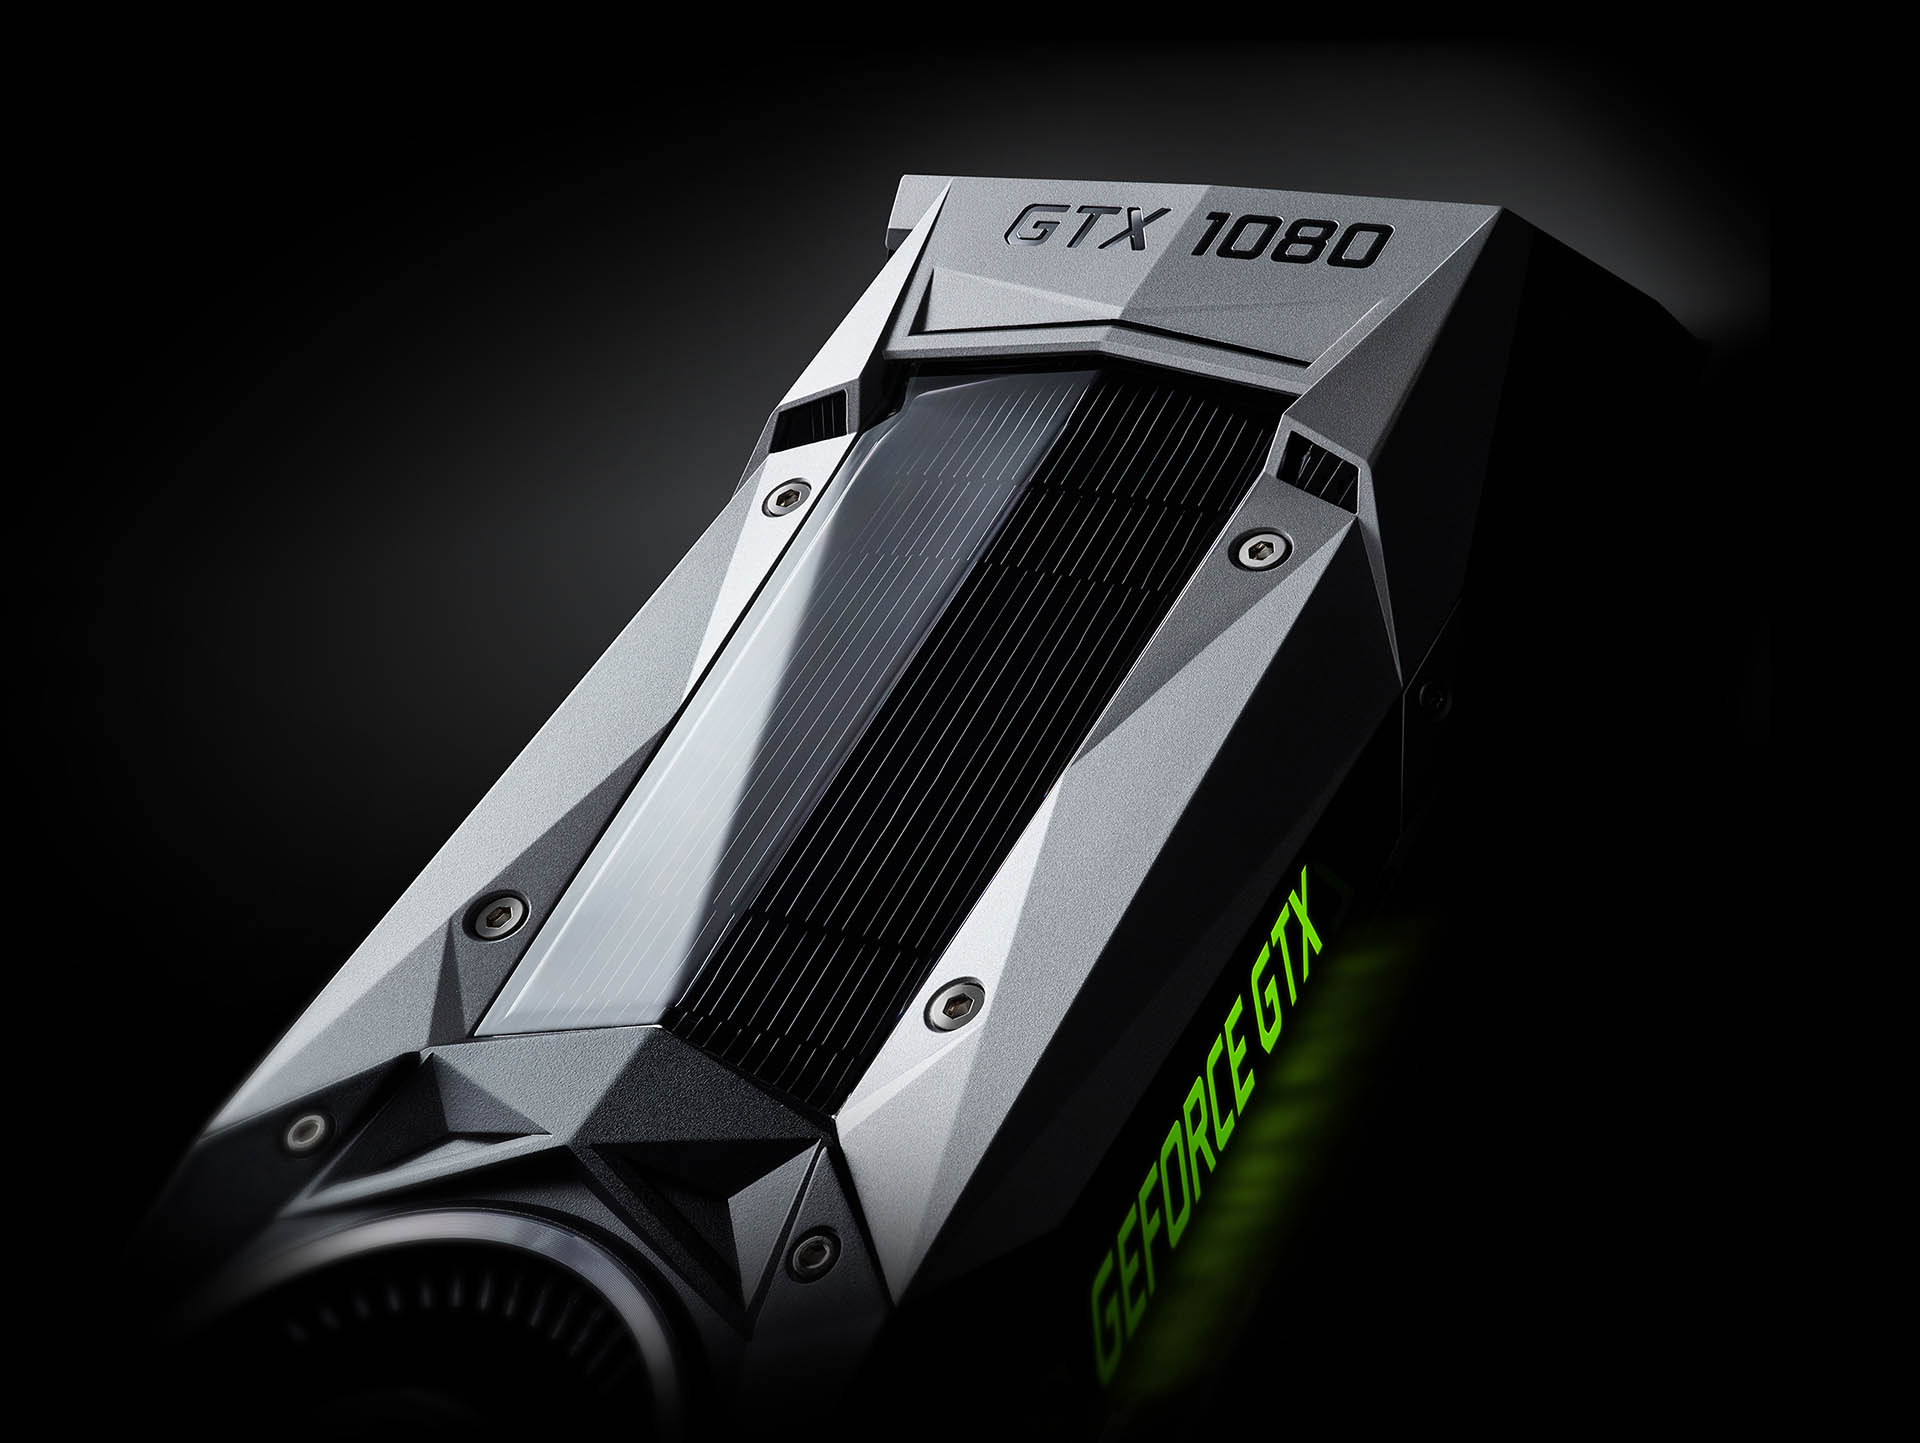 Nvidia GeForce GTX1080 Founders Edition test